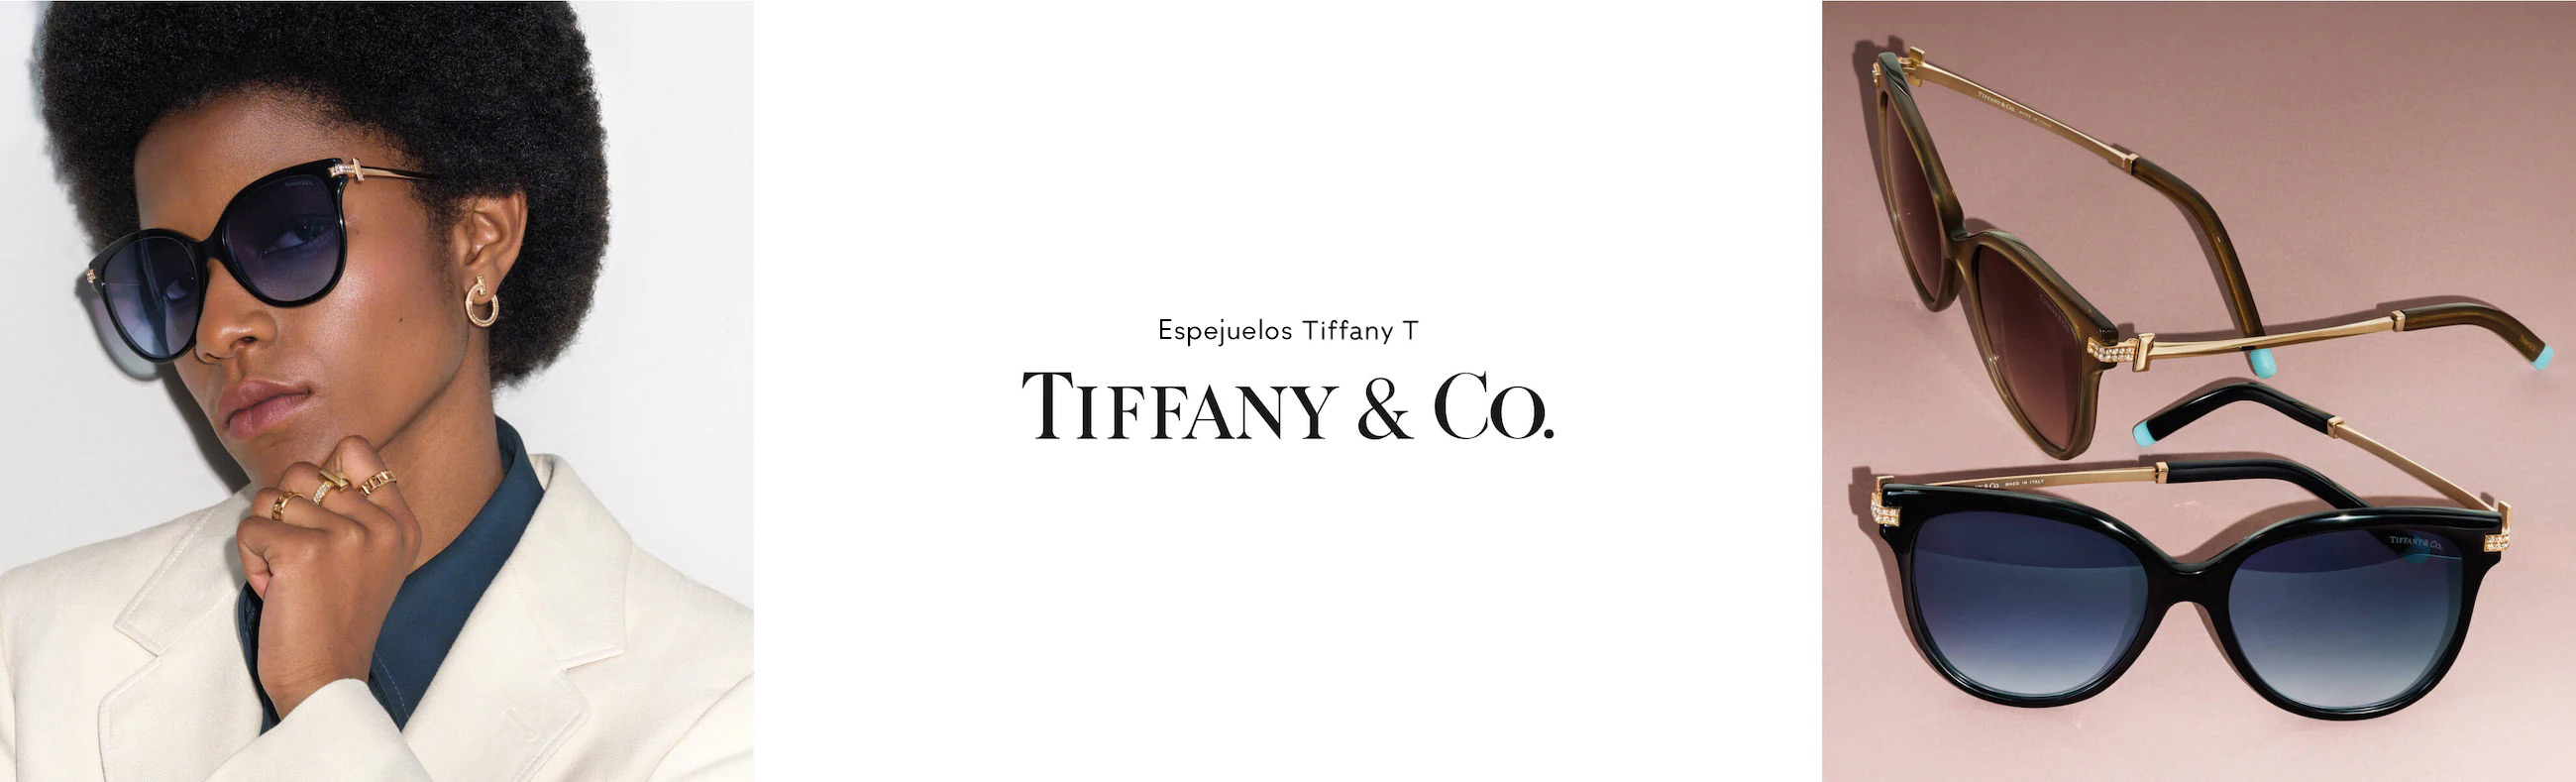 Tiffany image